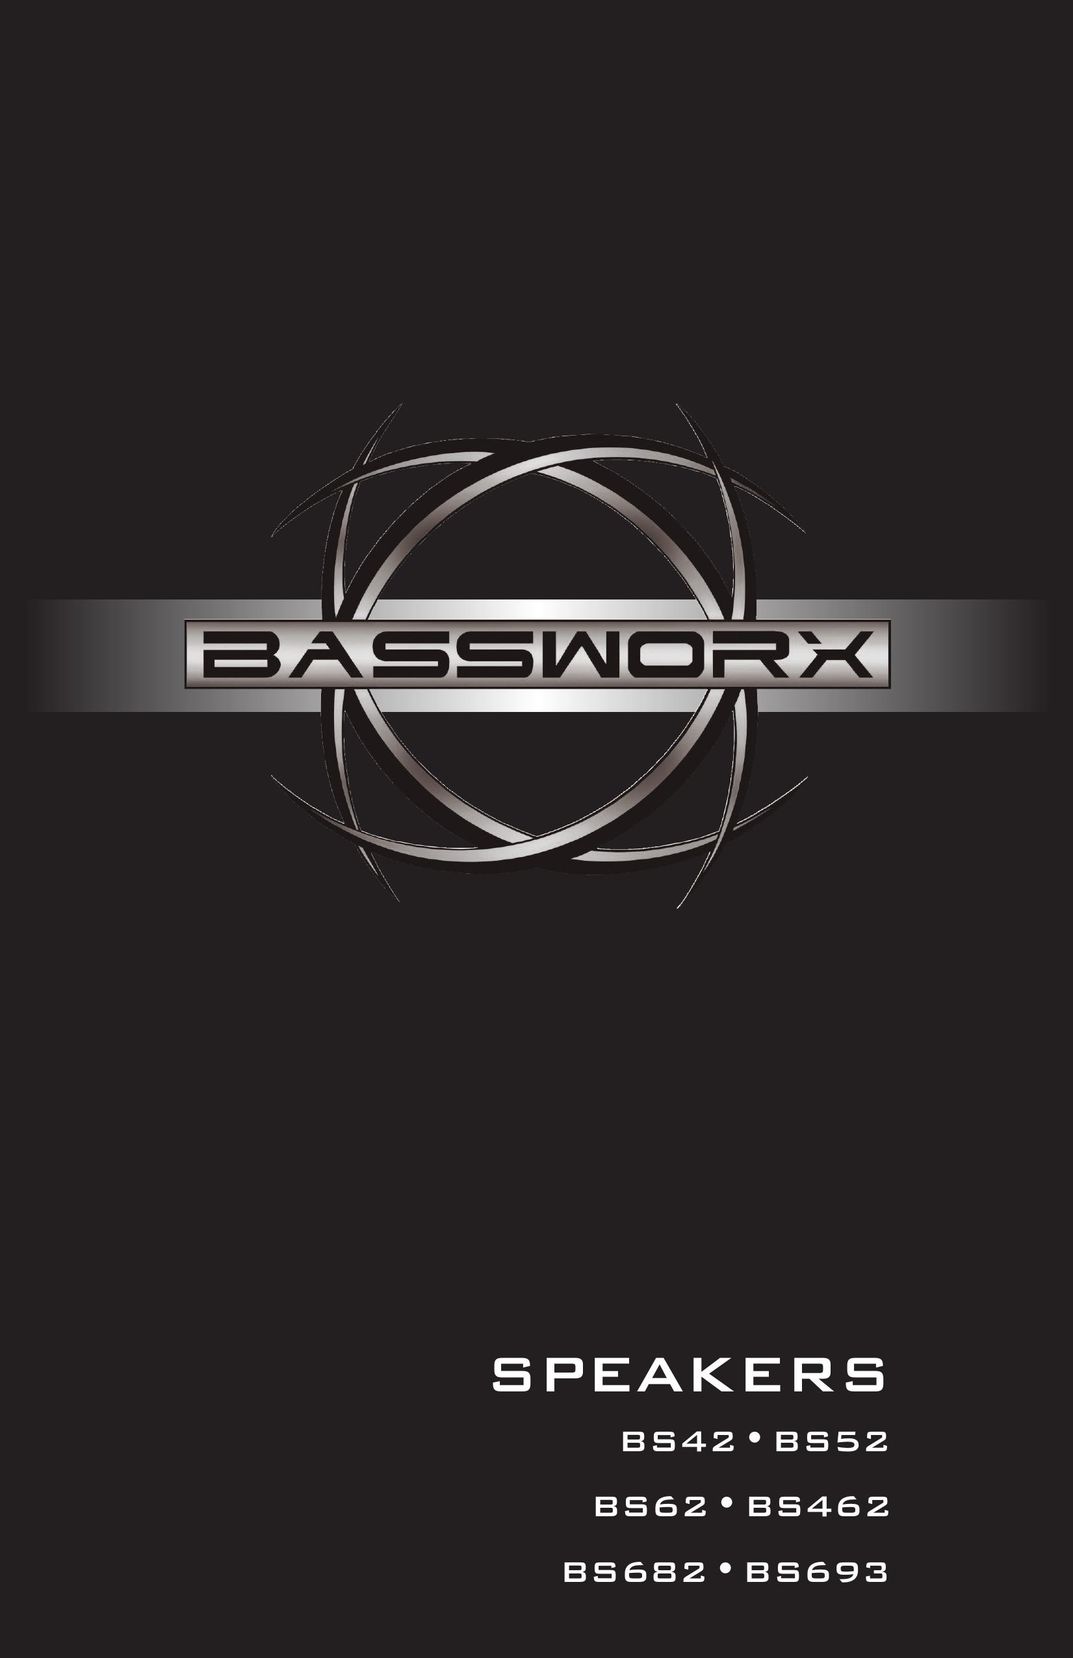 Bassworx BS42 Car Speaker User Manual